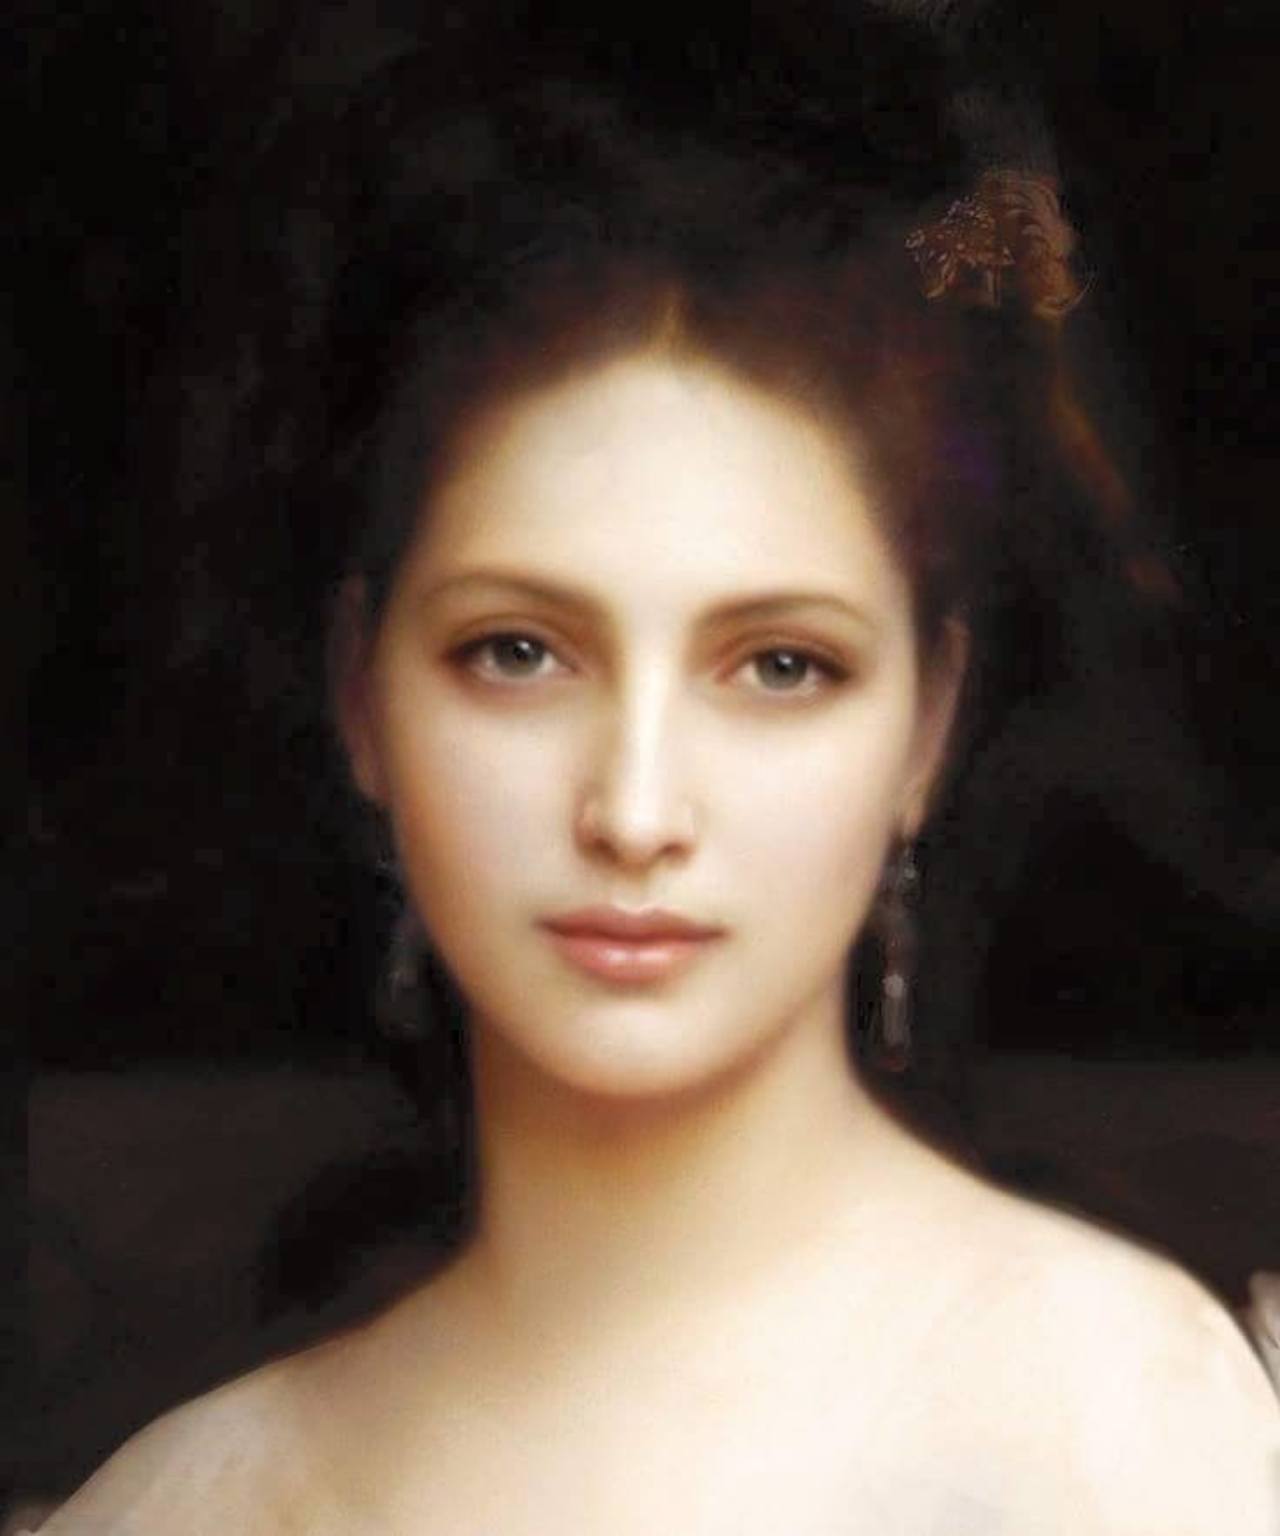 RT @universictimes: “@afagasta: WilliamAdolphe Bouguereau (1825–1905), #Afrodite
Happy Friday!) http://t.co/KEblcq3hYJ”PERFECT #portrait @PatriziaRametta